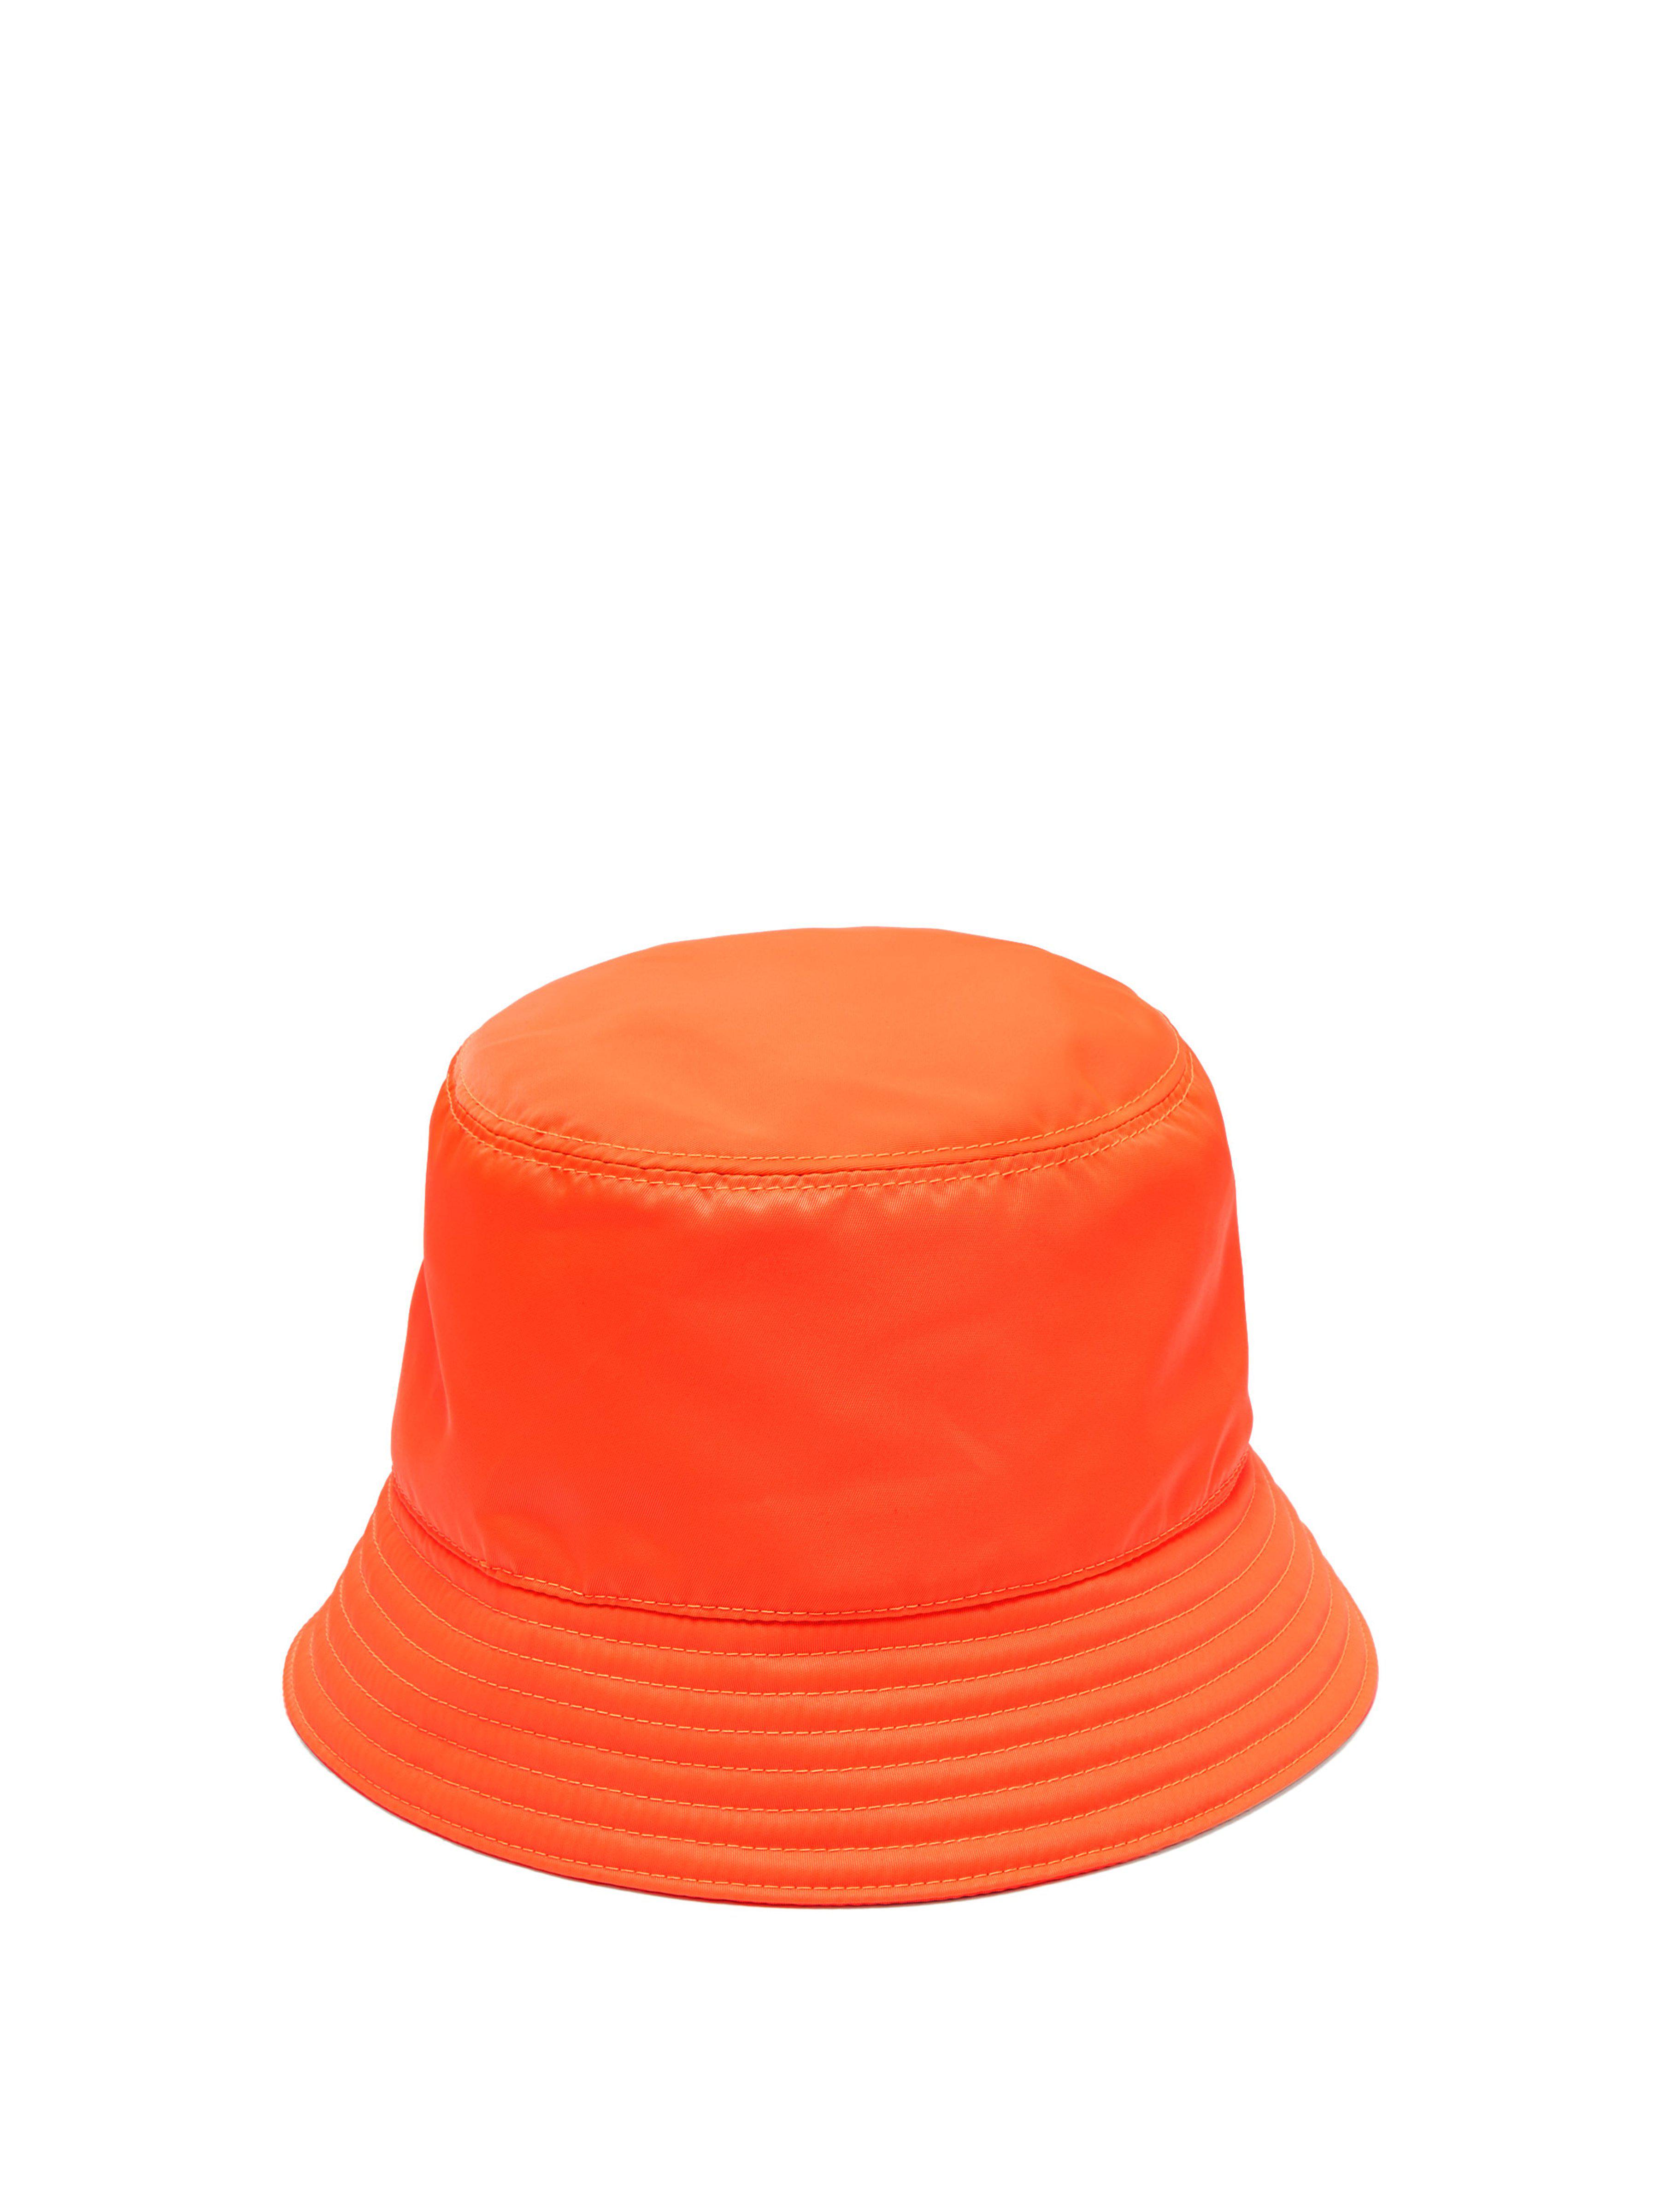 Orange Prada Bucket Hat Clearance, 57% OFF | www.slyderstavern.com